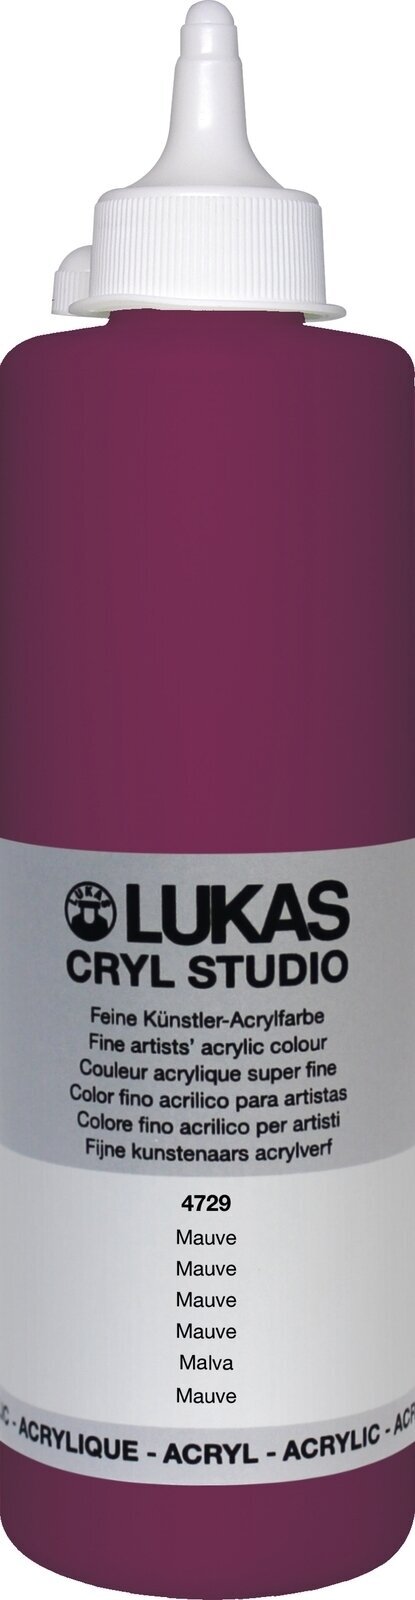 Acrylic Paint Lukas Cryl Studio Acrylic Paint 500 ml Mauve